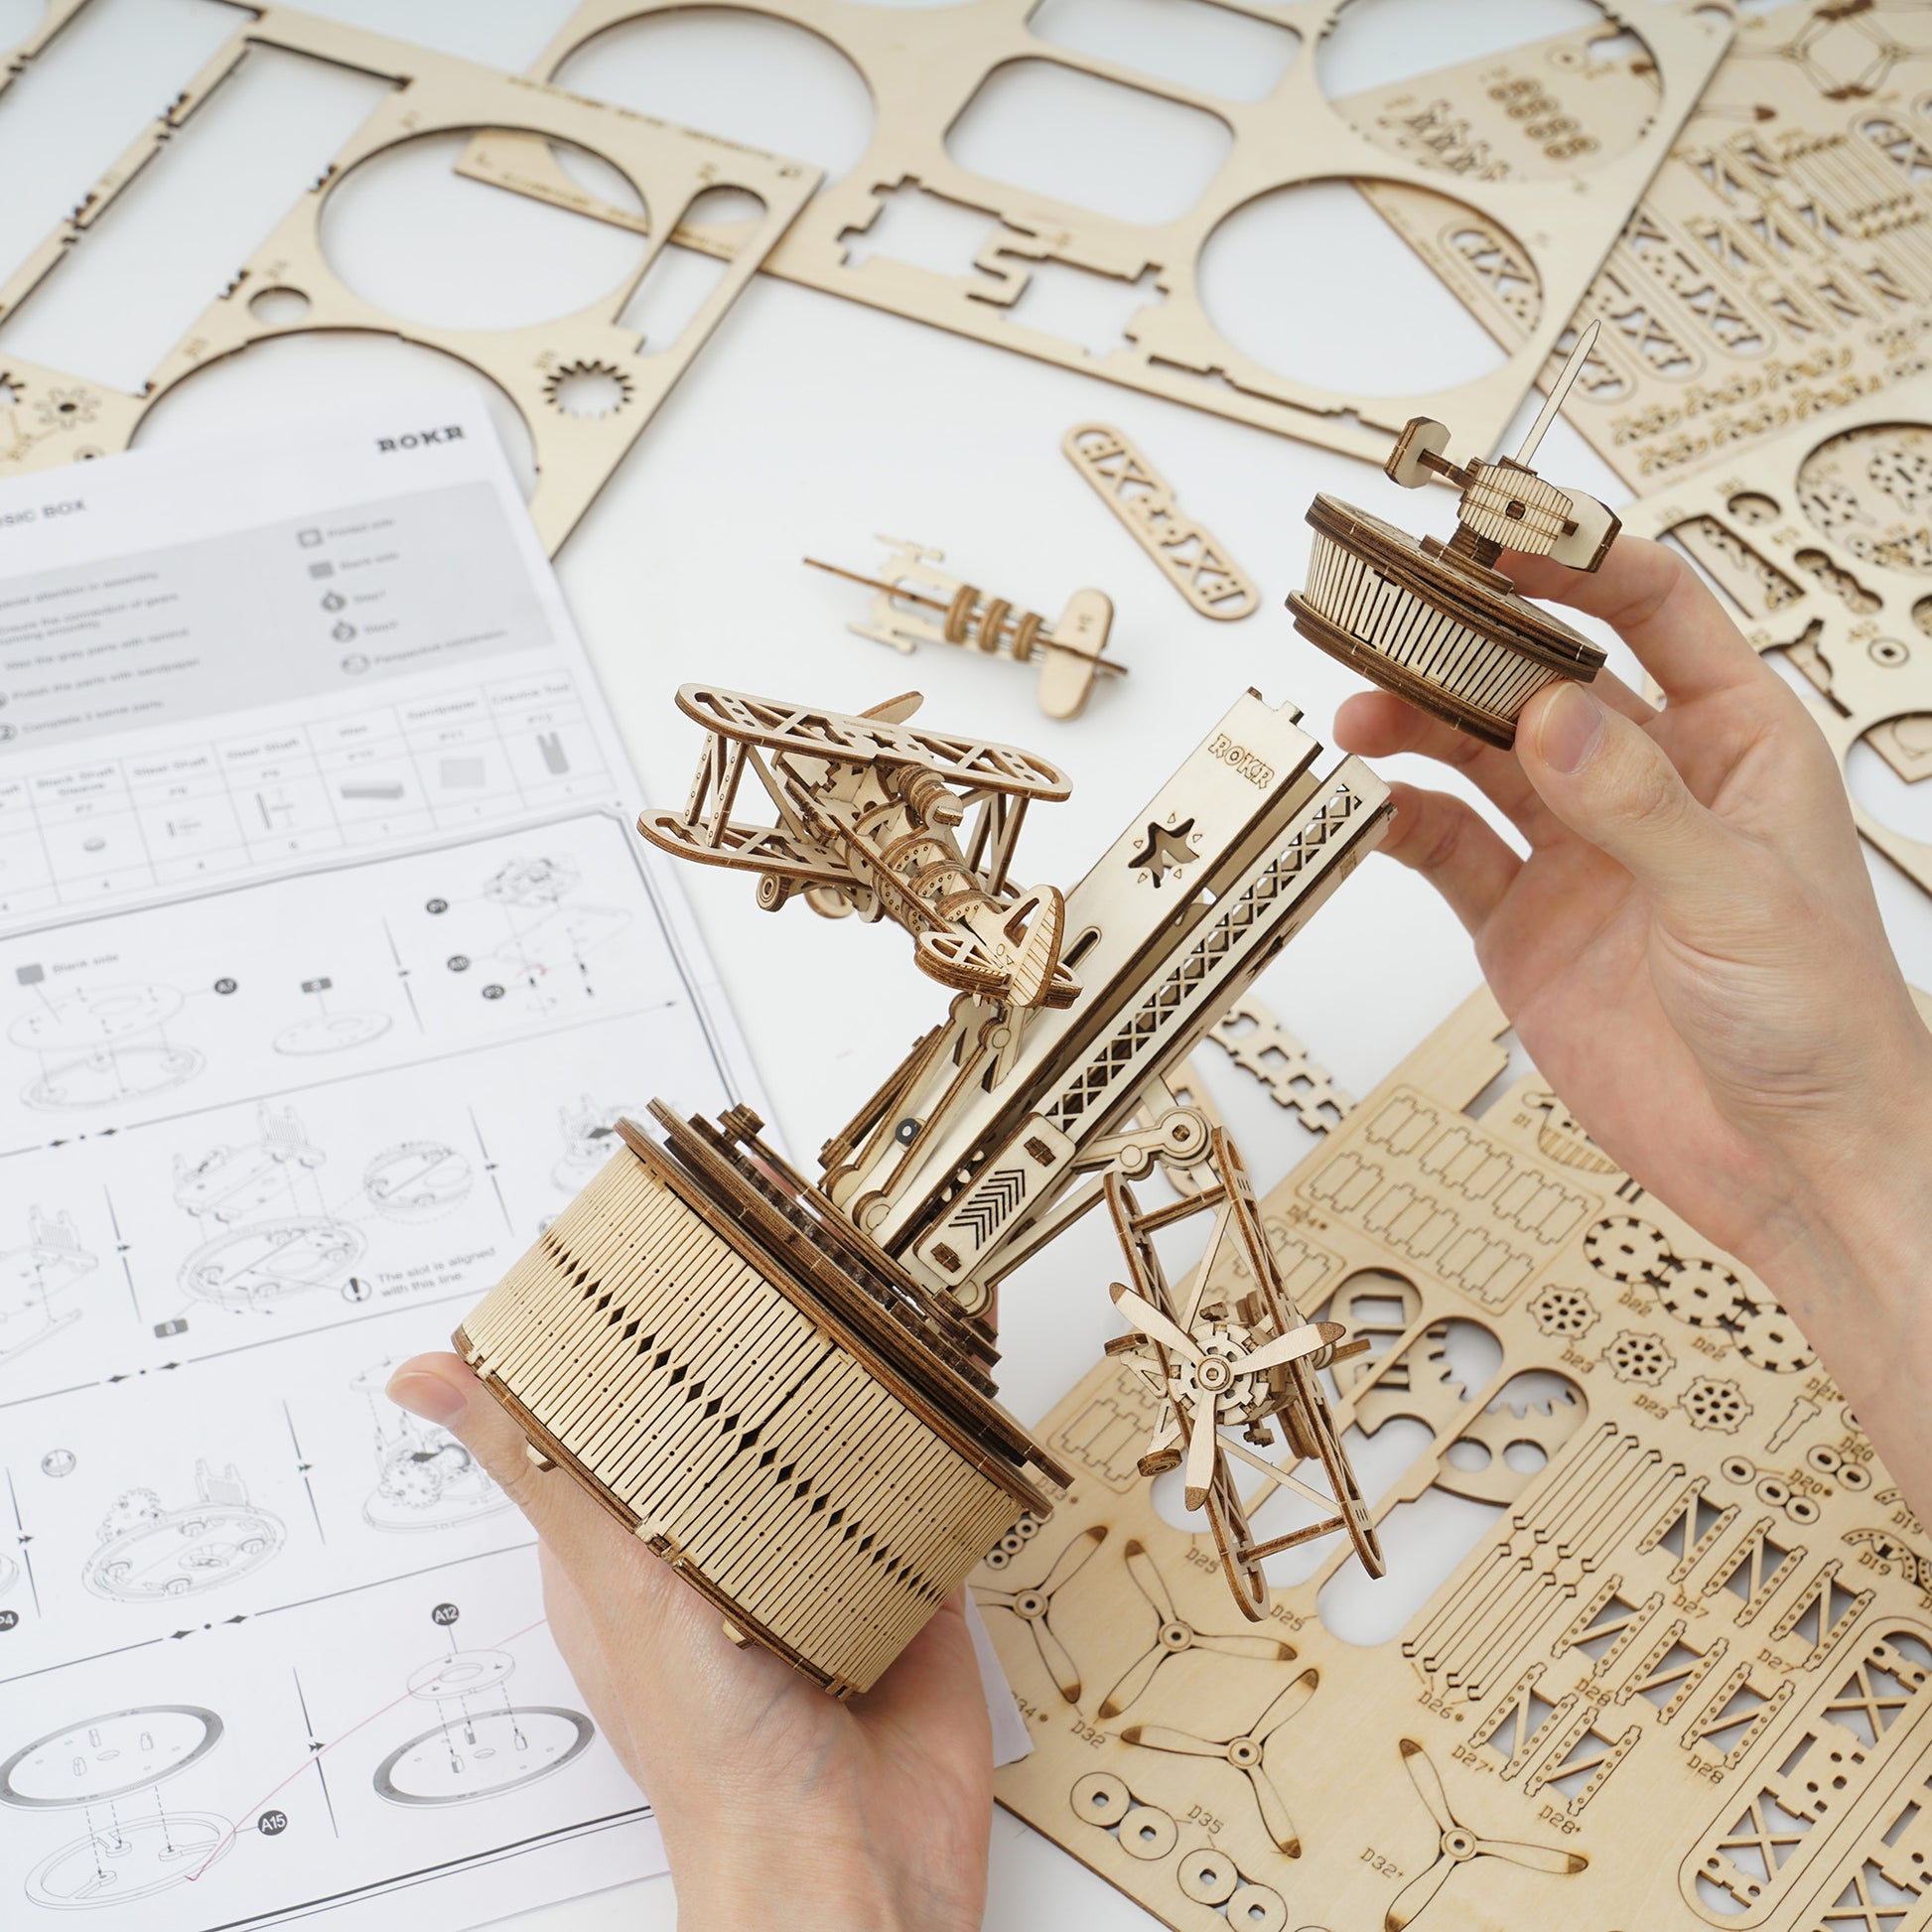 Control Tower (Music Box) - 3D Holzpuzzle im Zusammenbau